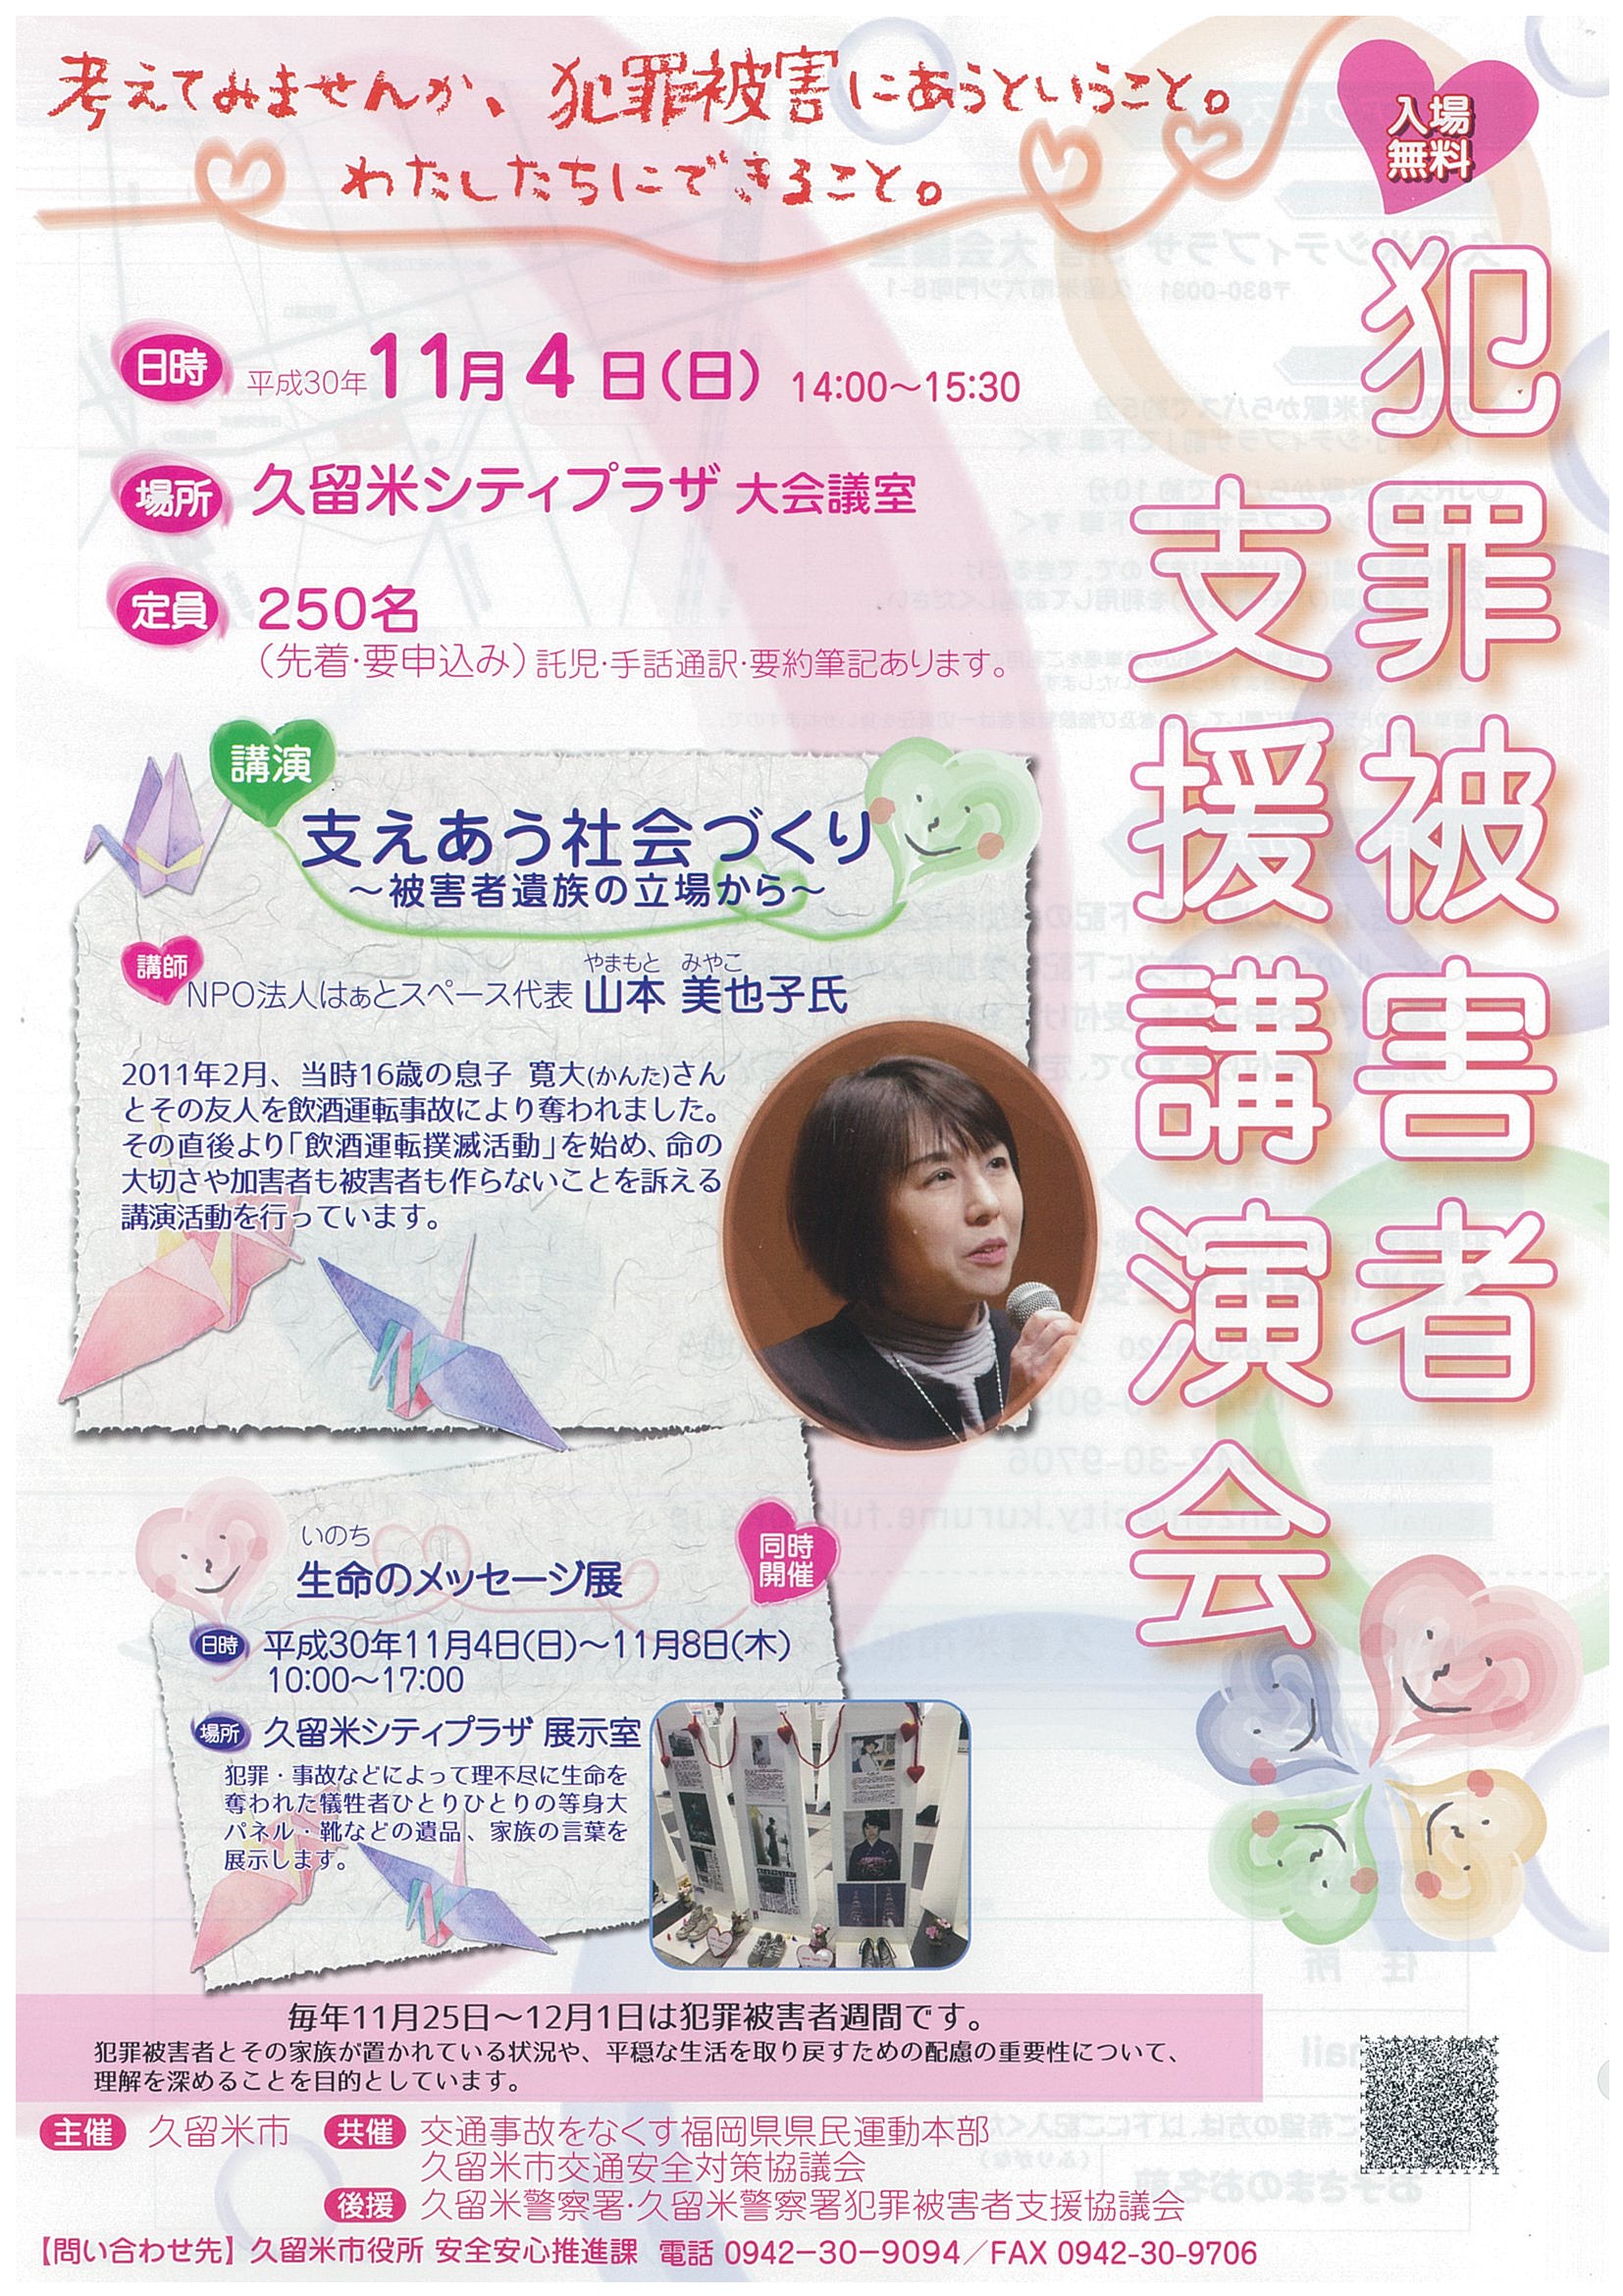 山本美也子氏による犯罪被害者支援講演会